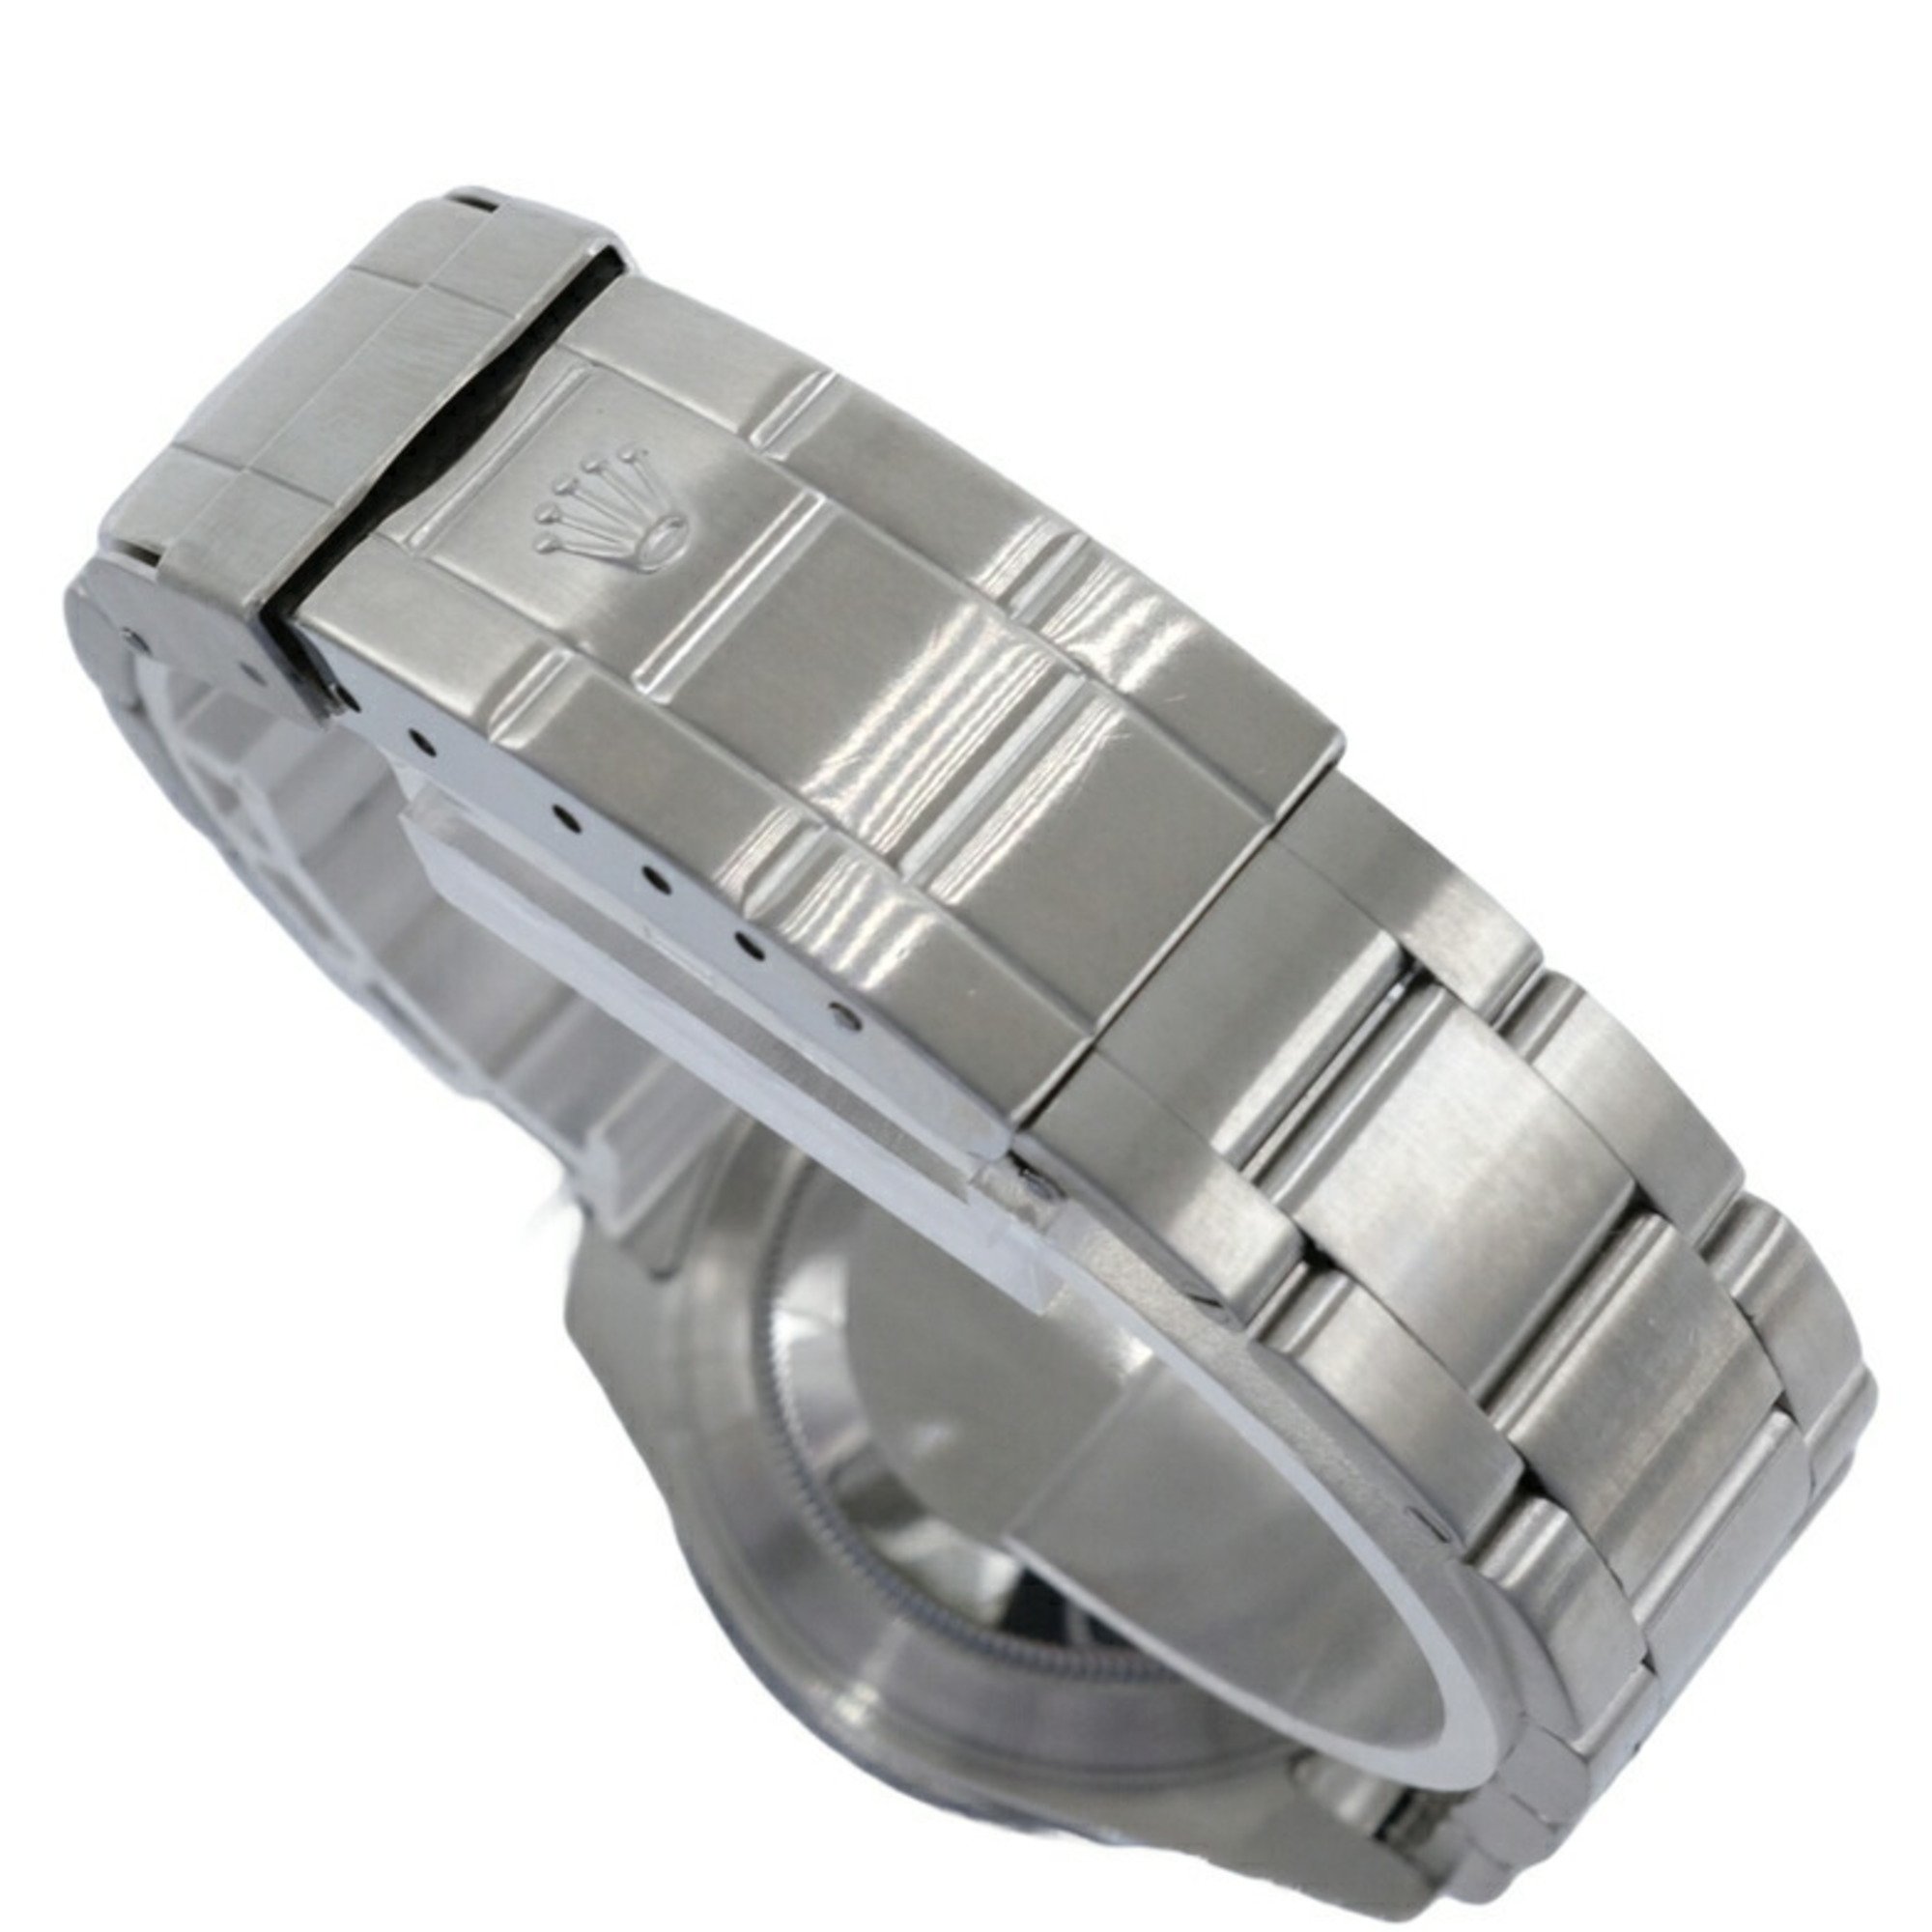 Rolex Submariner Green Sub Automatic Self-Winding Wristwatch 16610LV 16610